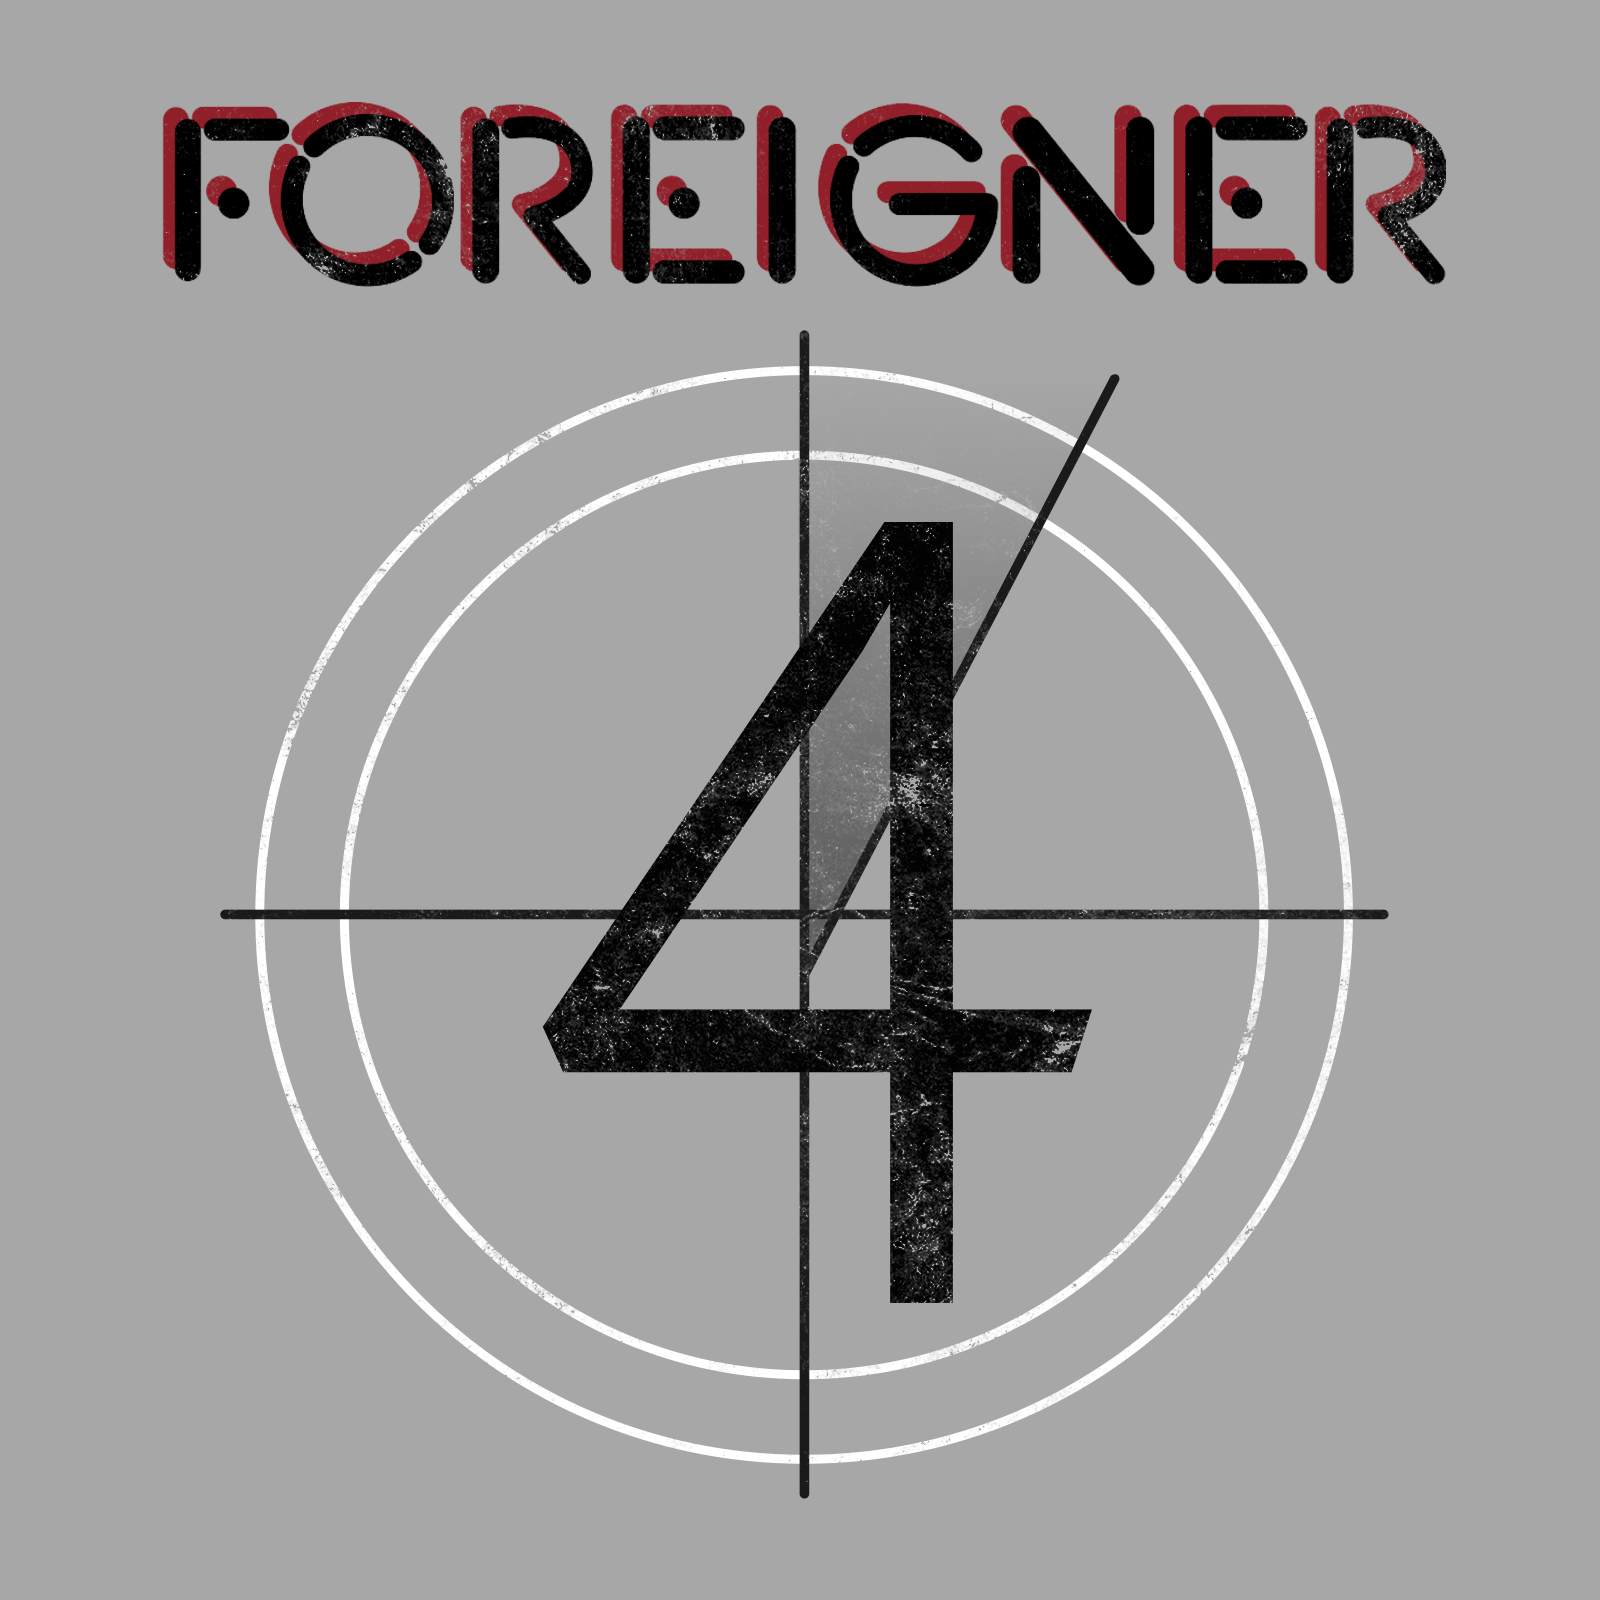 4 foreigner